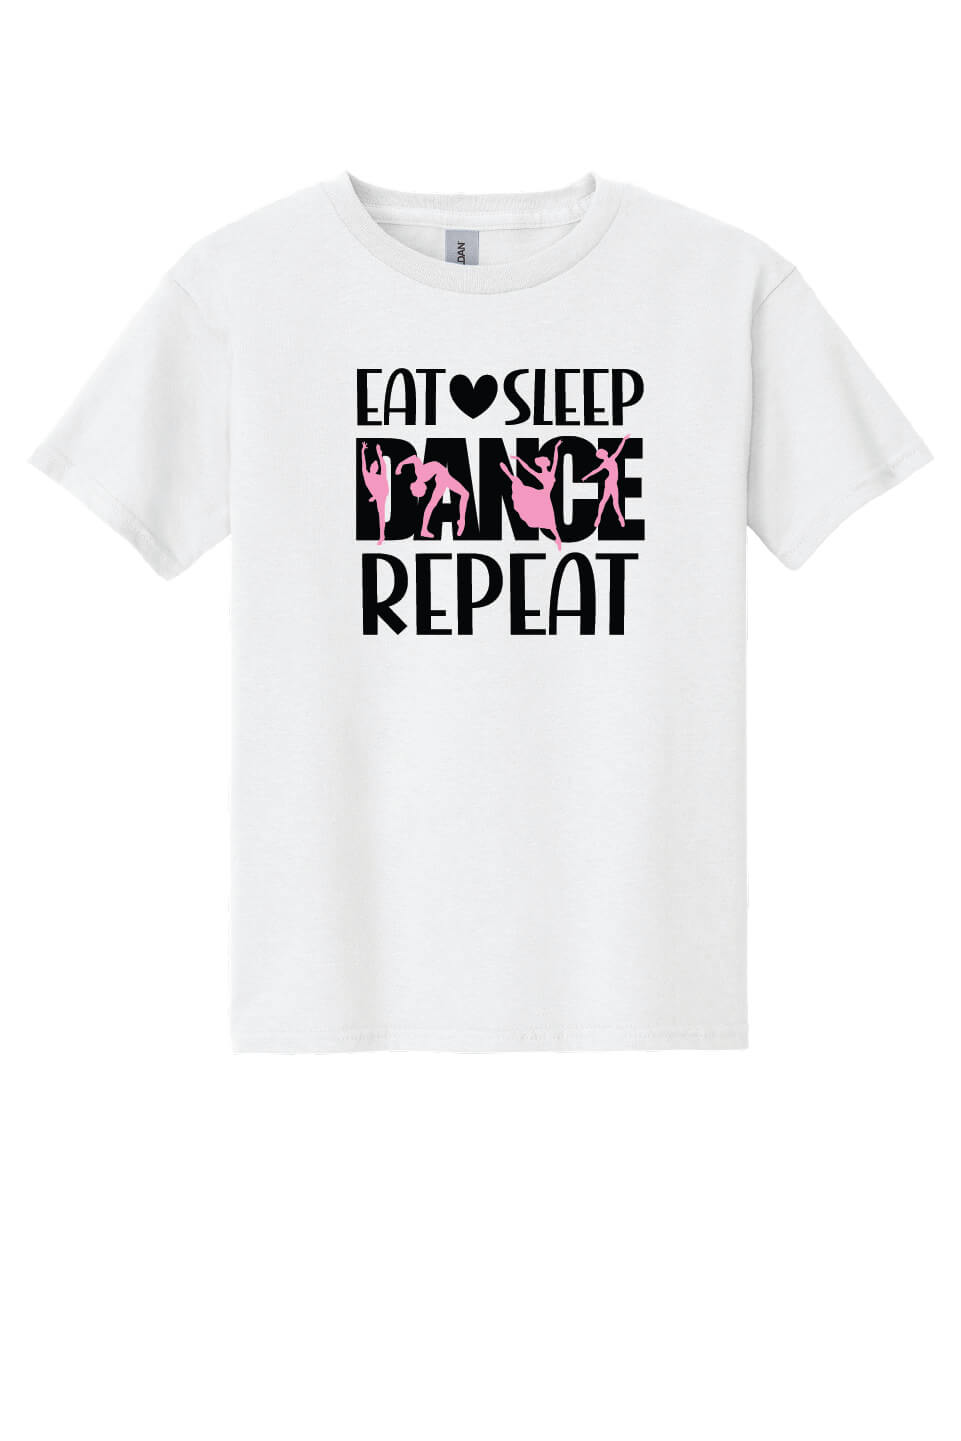 Eat Sleep Dance Repeat Short Sleeve T-Shirt (Youth) white